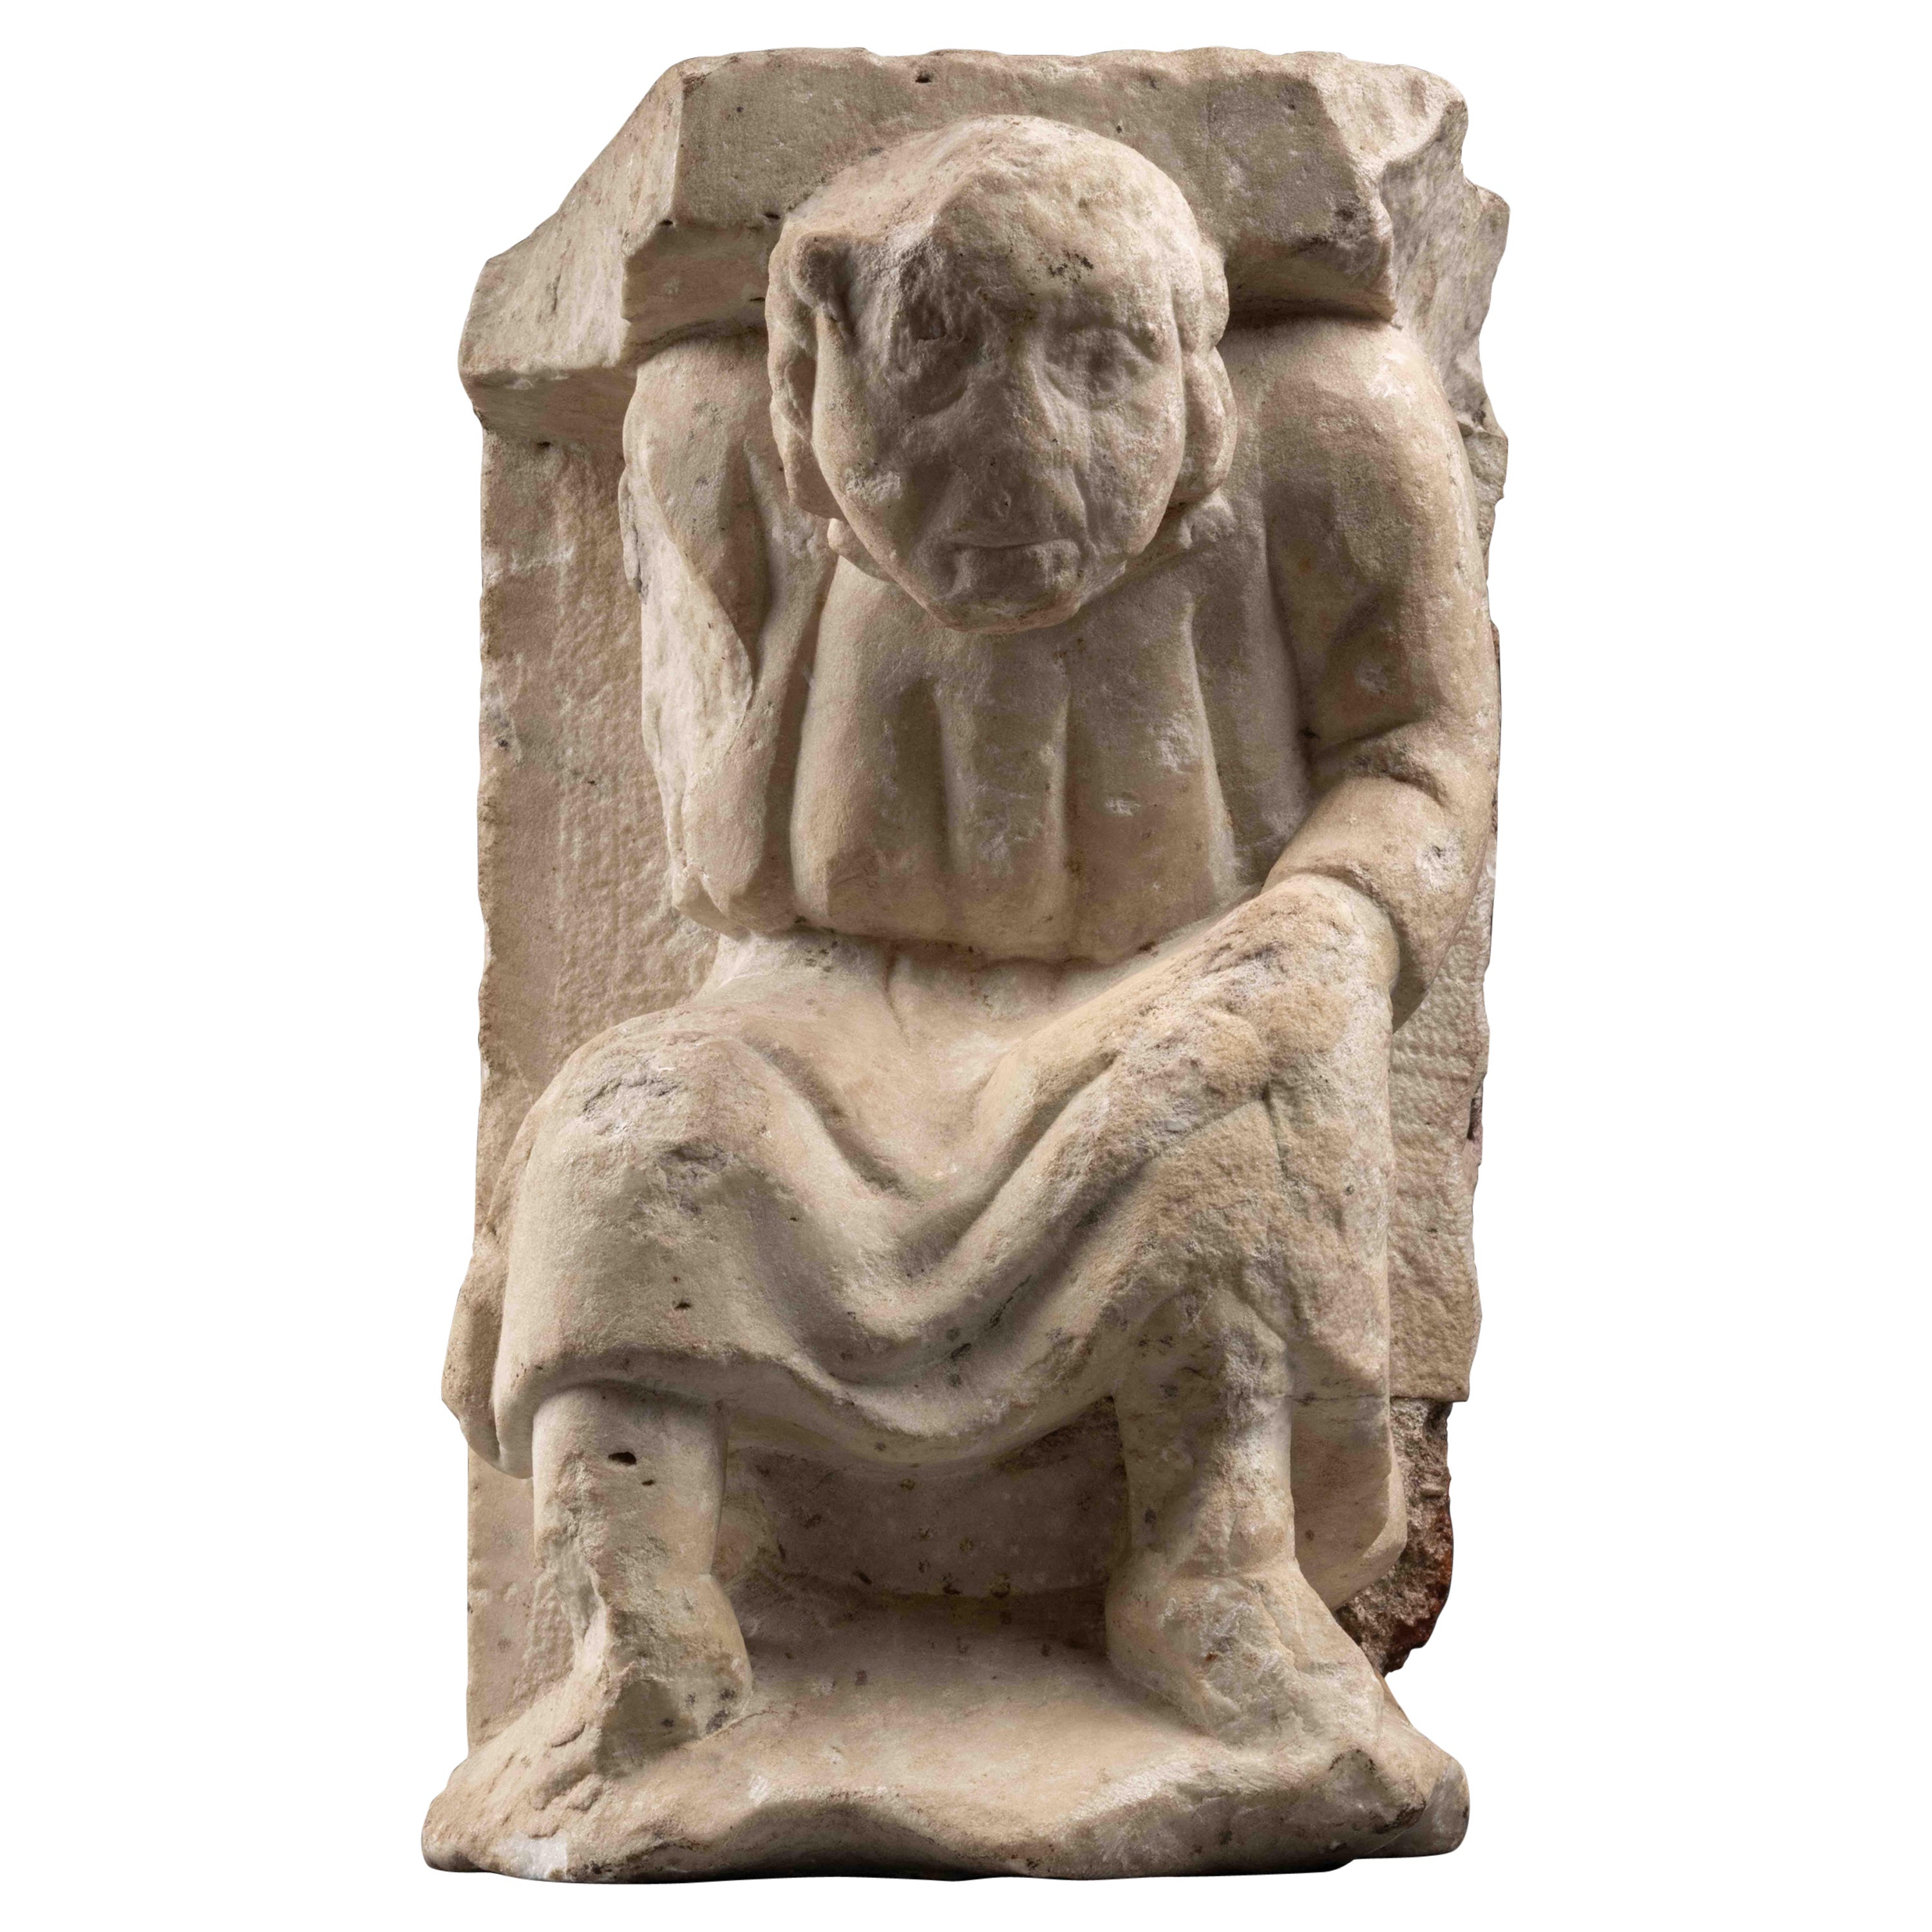 Telamon - Northern Italy, late 12th (Reemployed Roman marble)25000